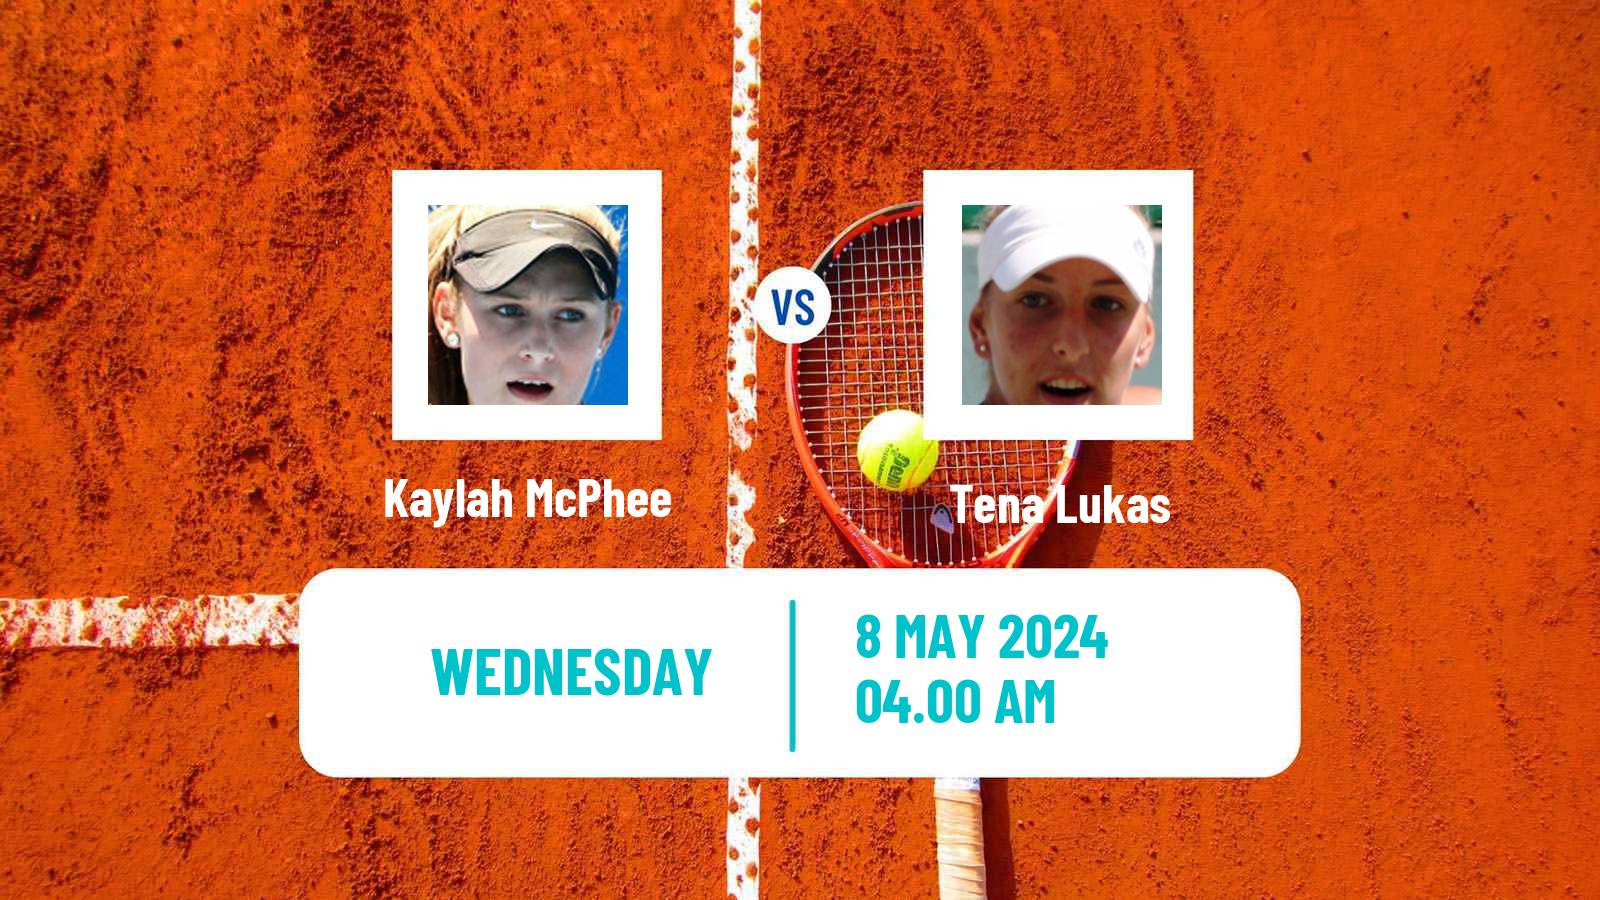 Tennis ITF W75 Trnava 2 Women Kaylah McPhee - Tena Lukas